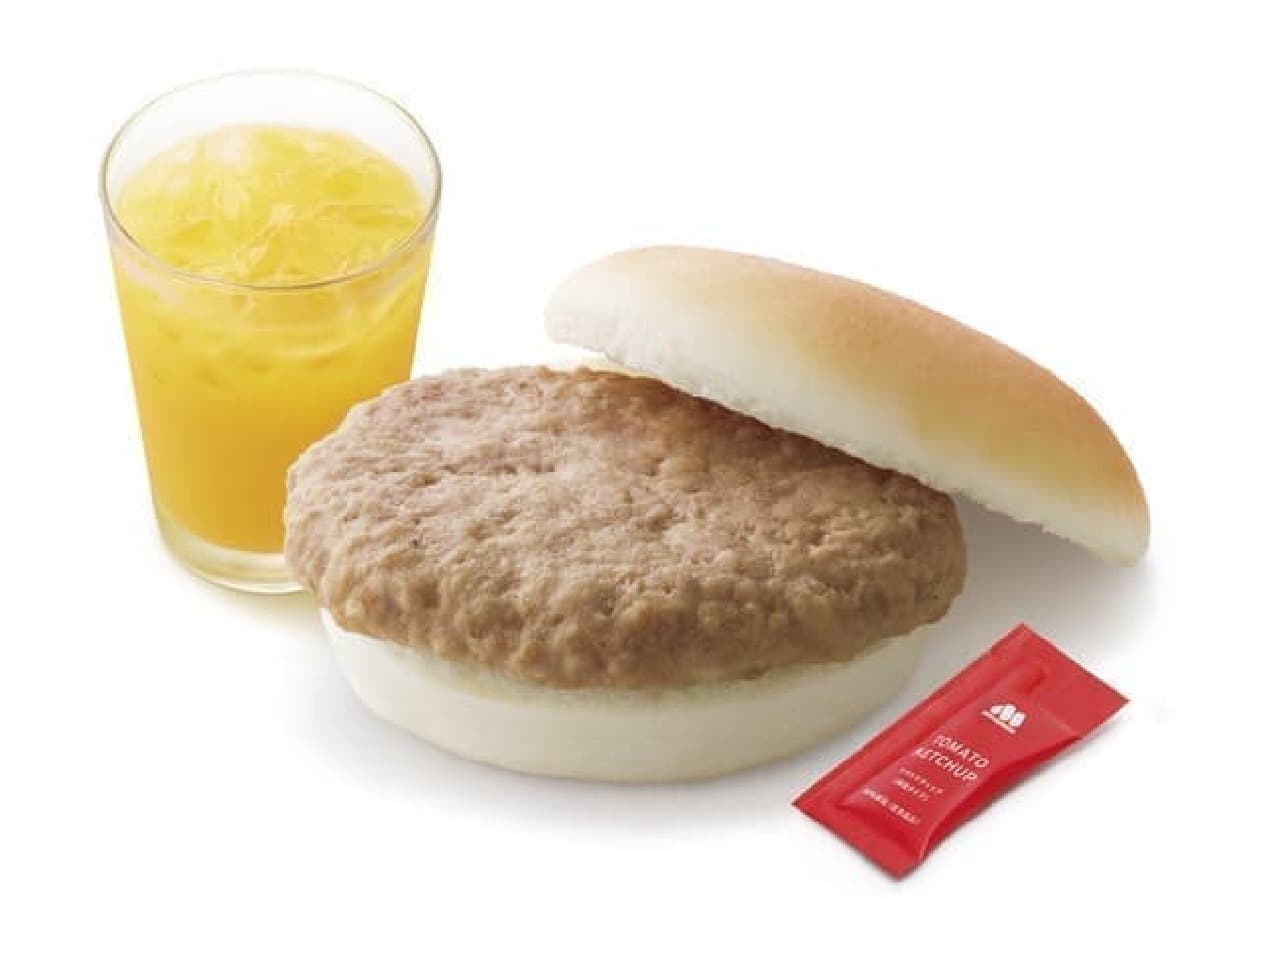 Mos Burger "Kirby of the Stars" collaboration toys --Moss Wai Wai set & low allergen menu set target